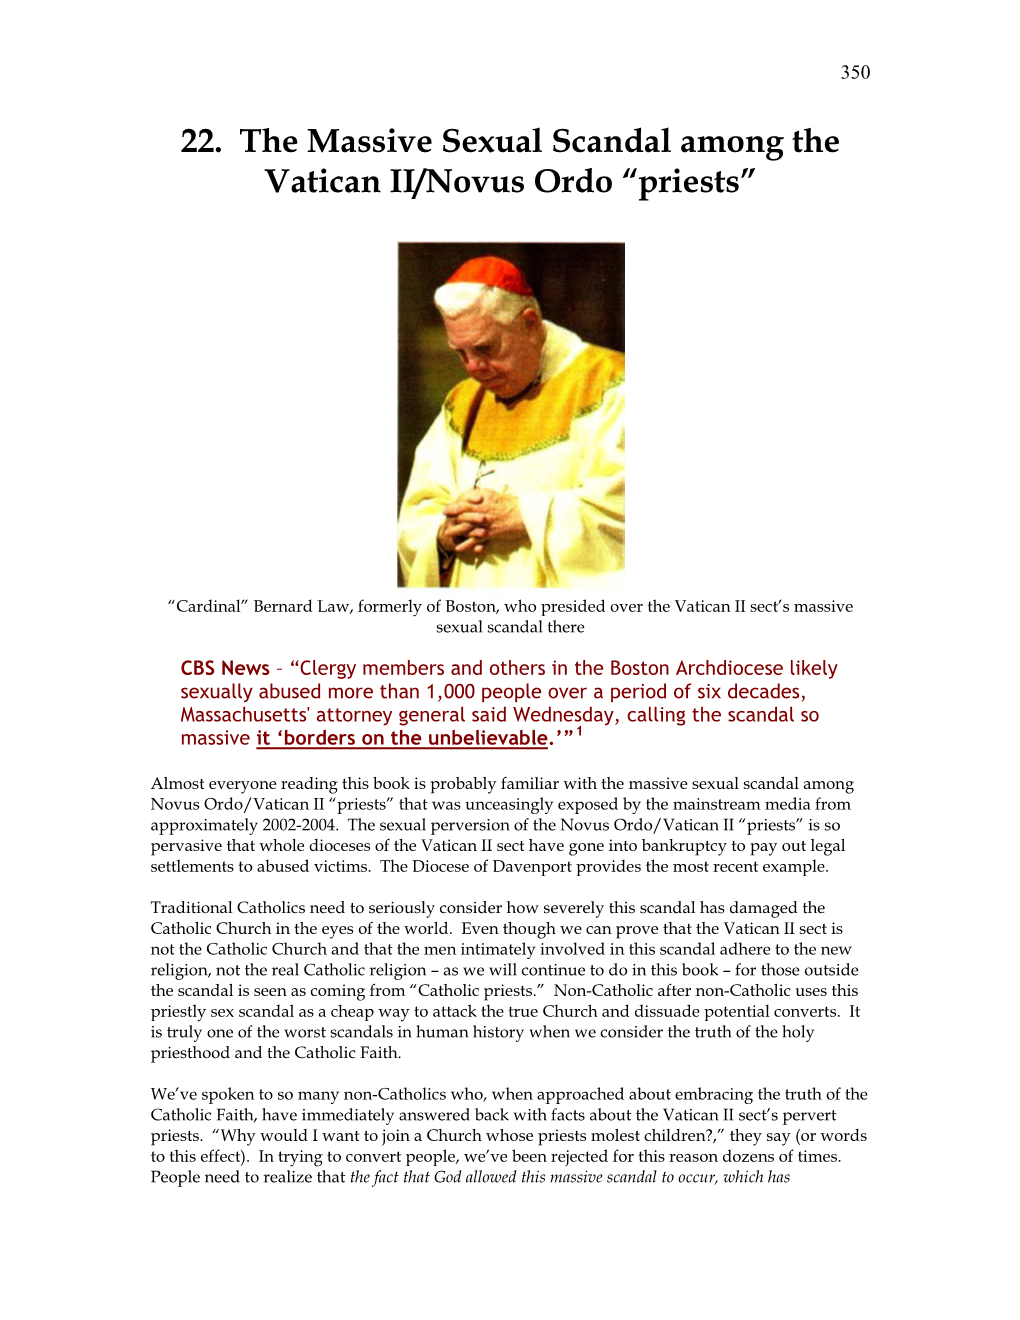 The Massive Sex Scandal Among the Vatican II/Novus Ordo "Priests"